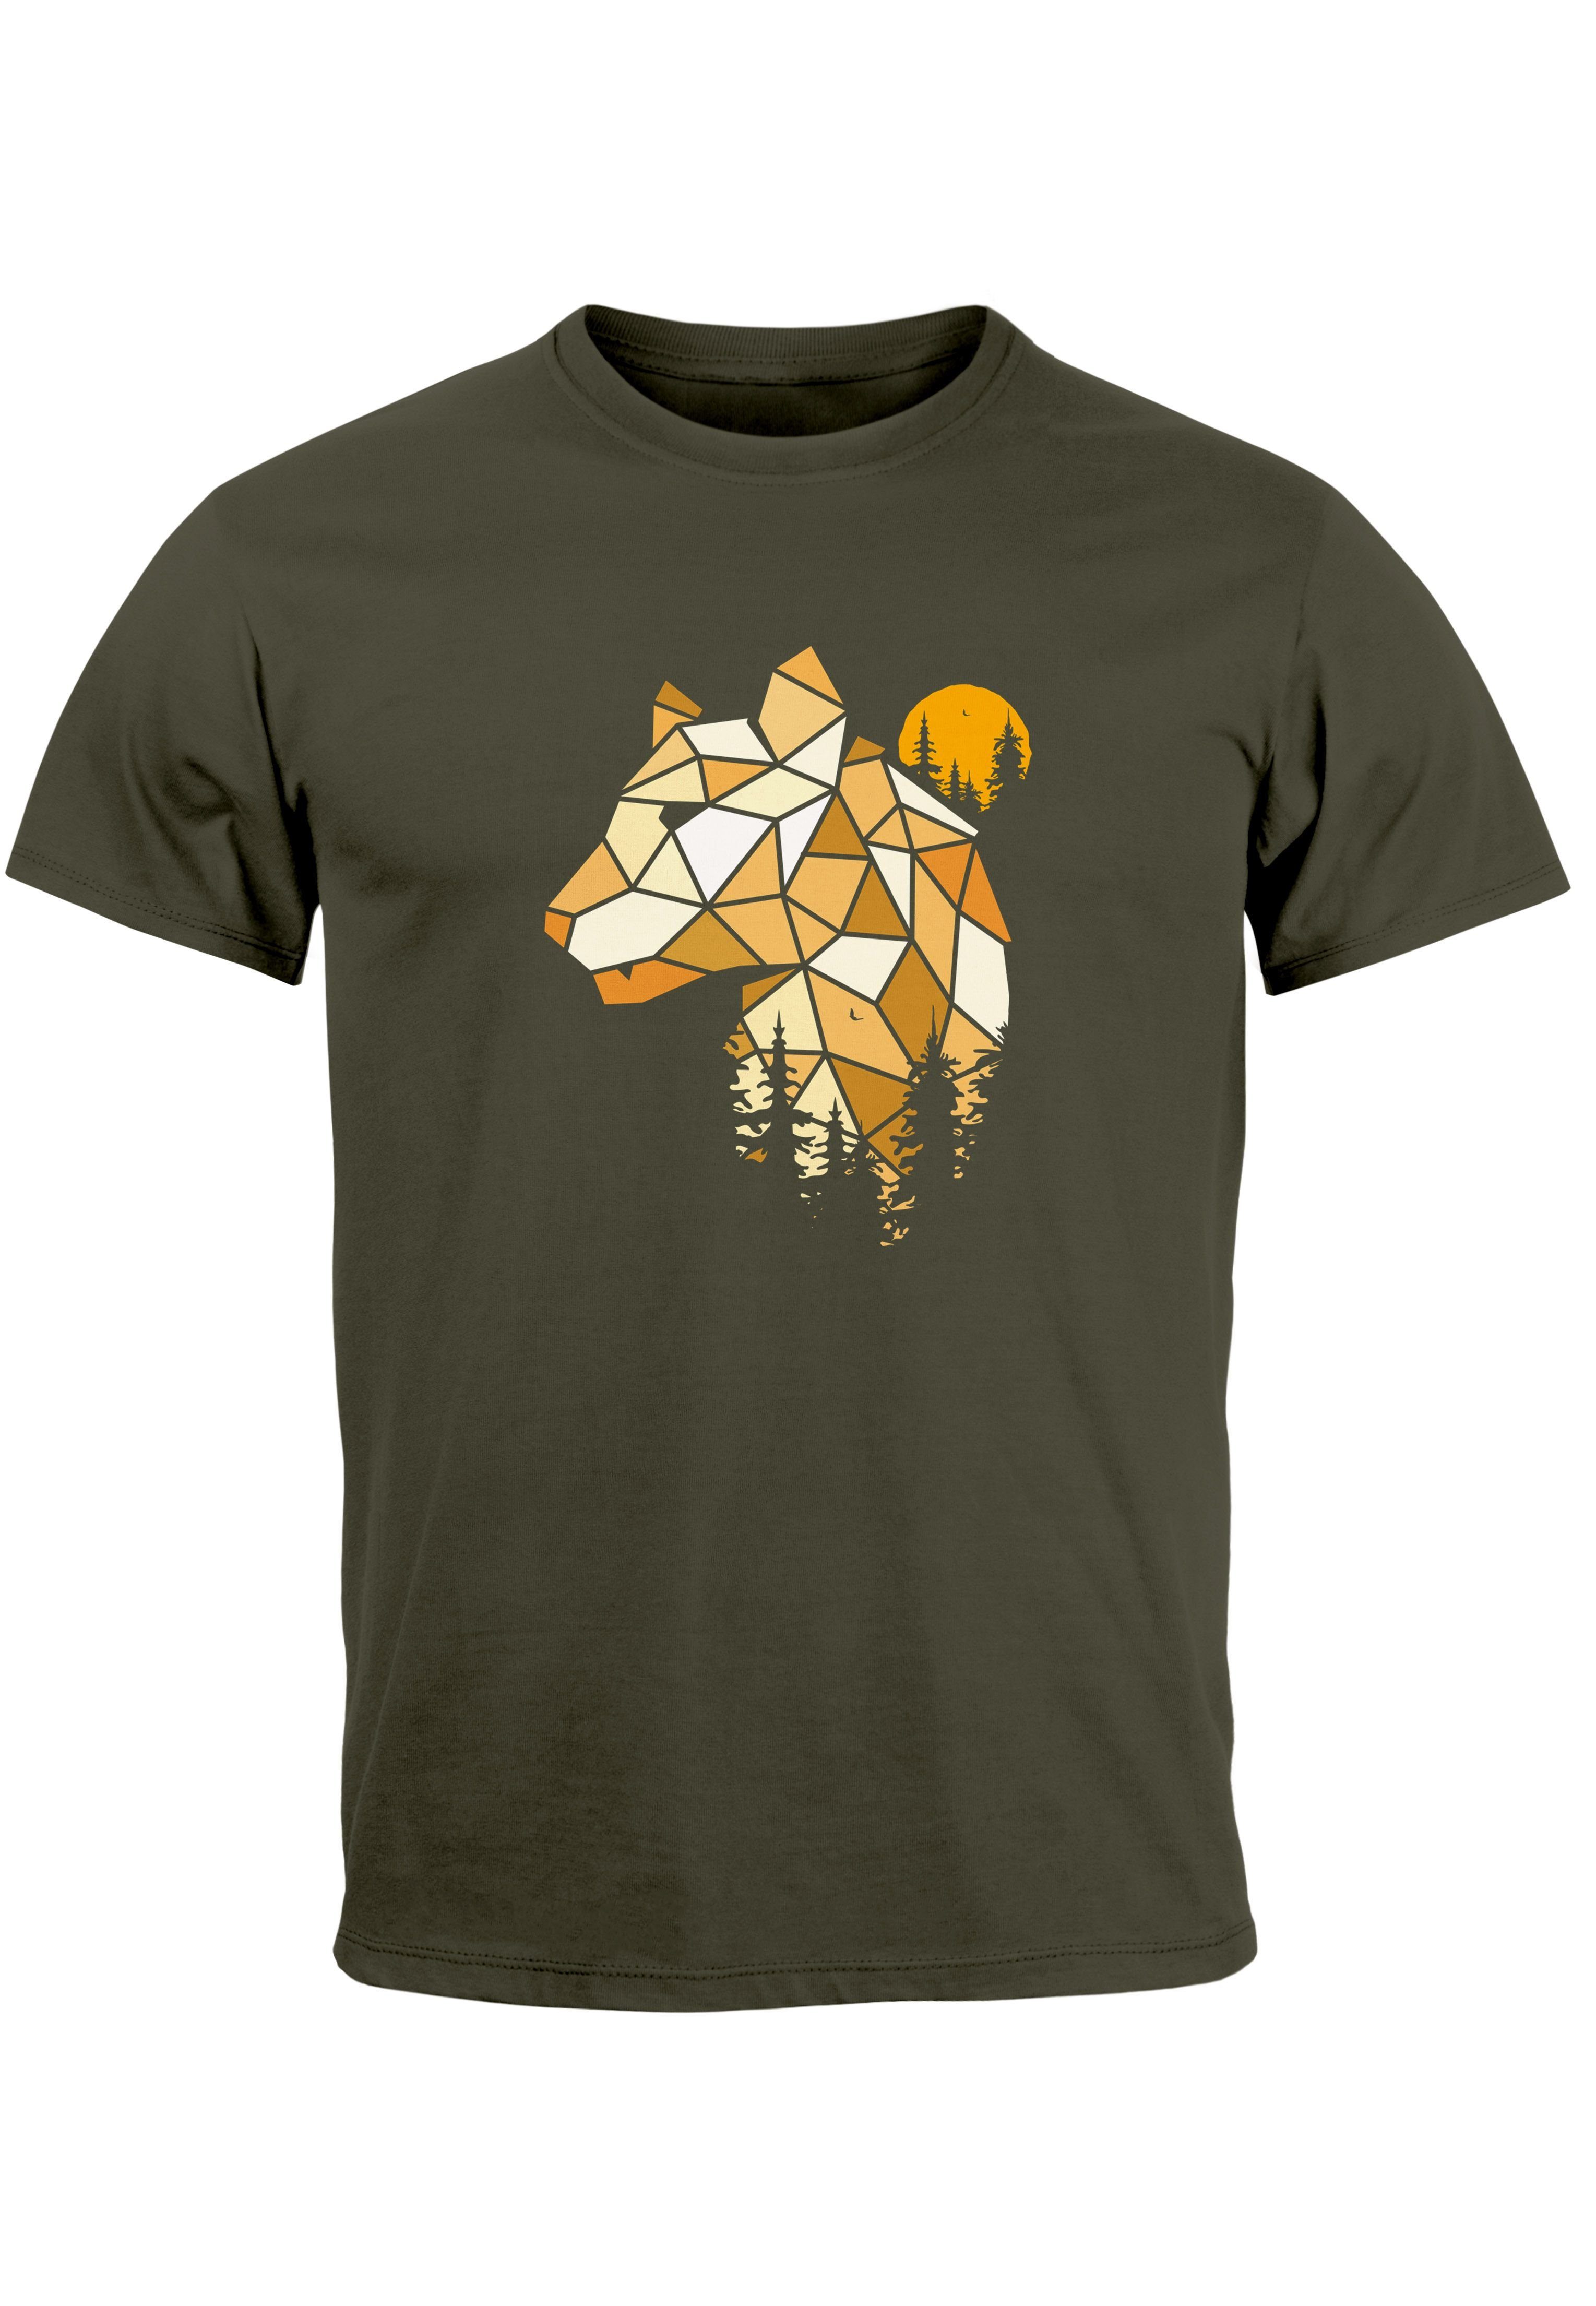 Outdoor Print mit Herren T-Shirt Wald Tiere Motiv Au Print Polygon Luchs Fashion Print-Shirt army Neverless